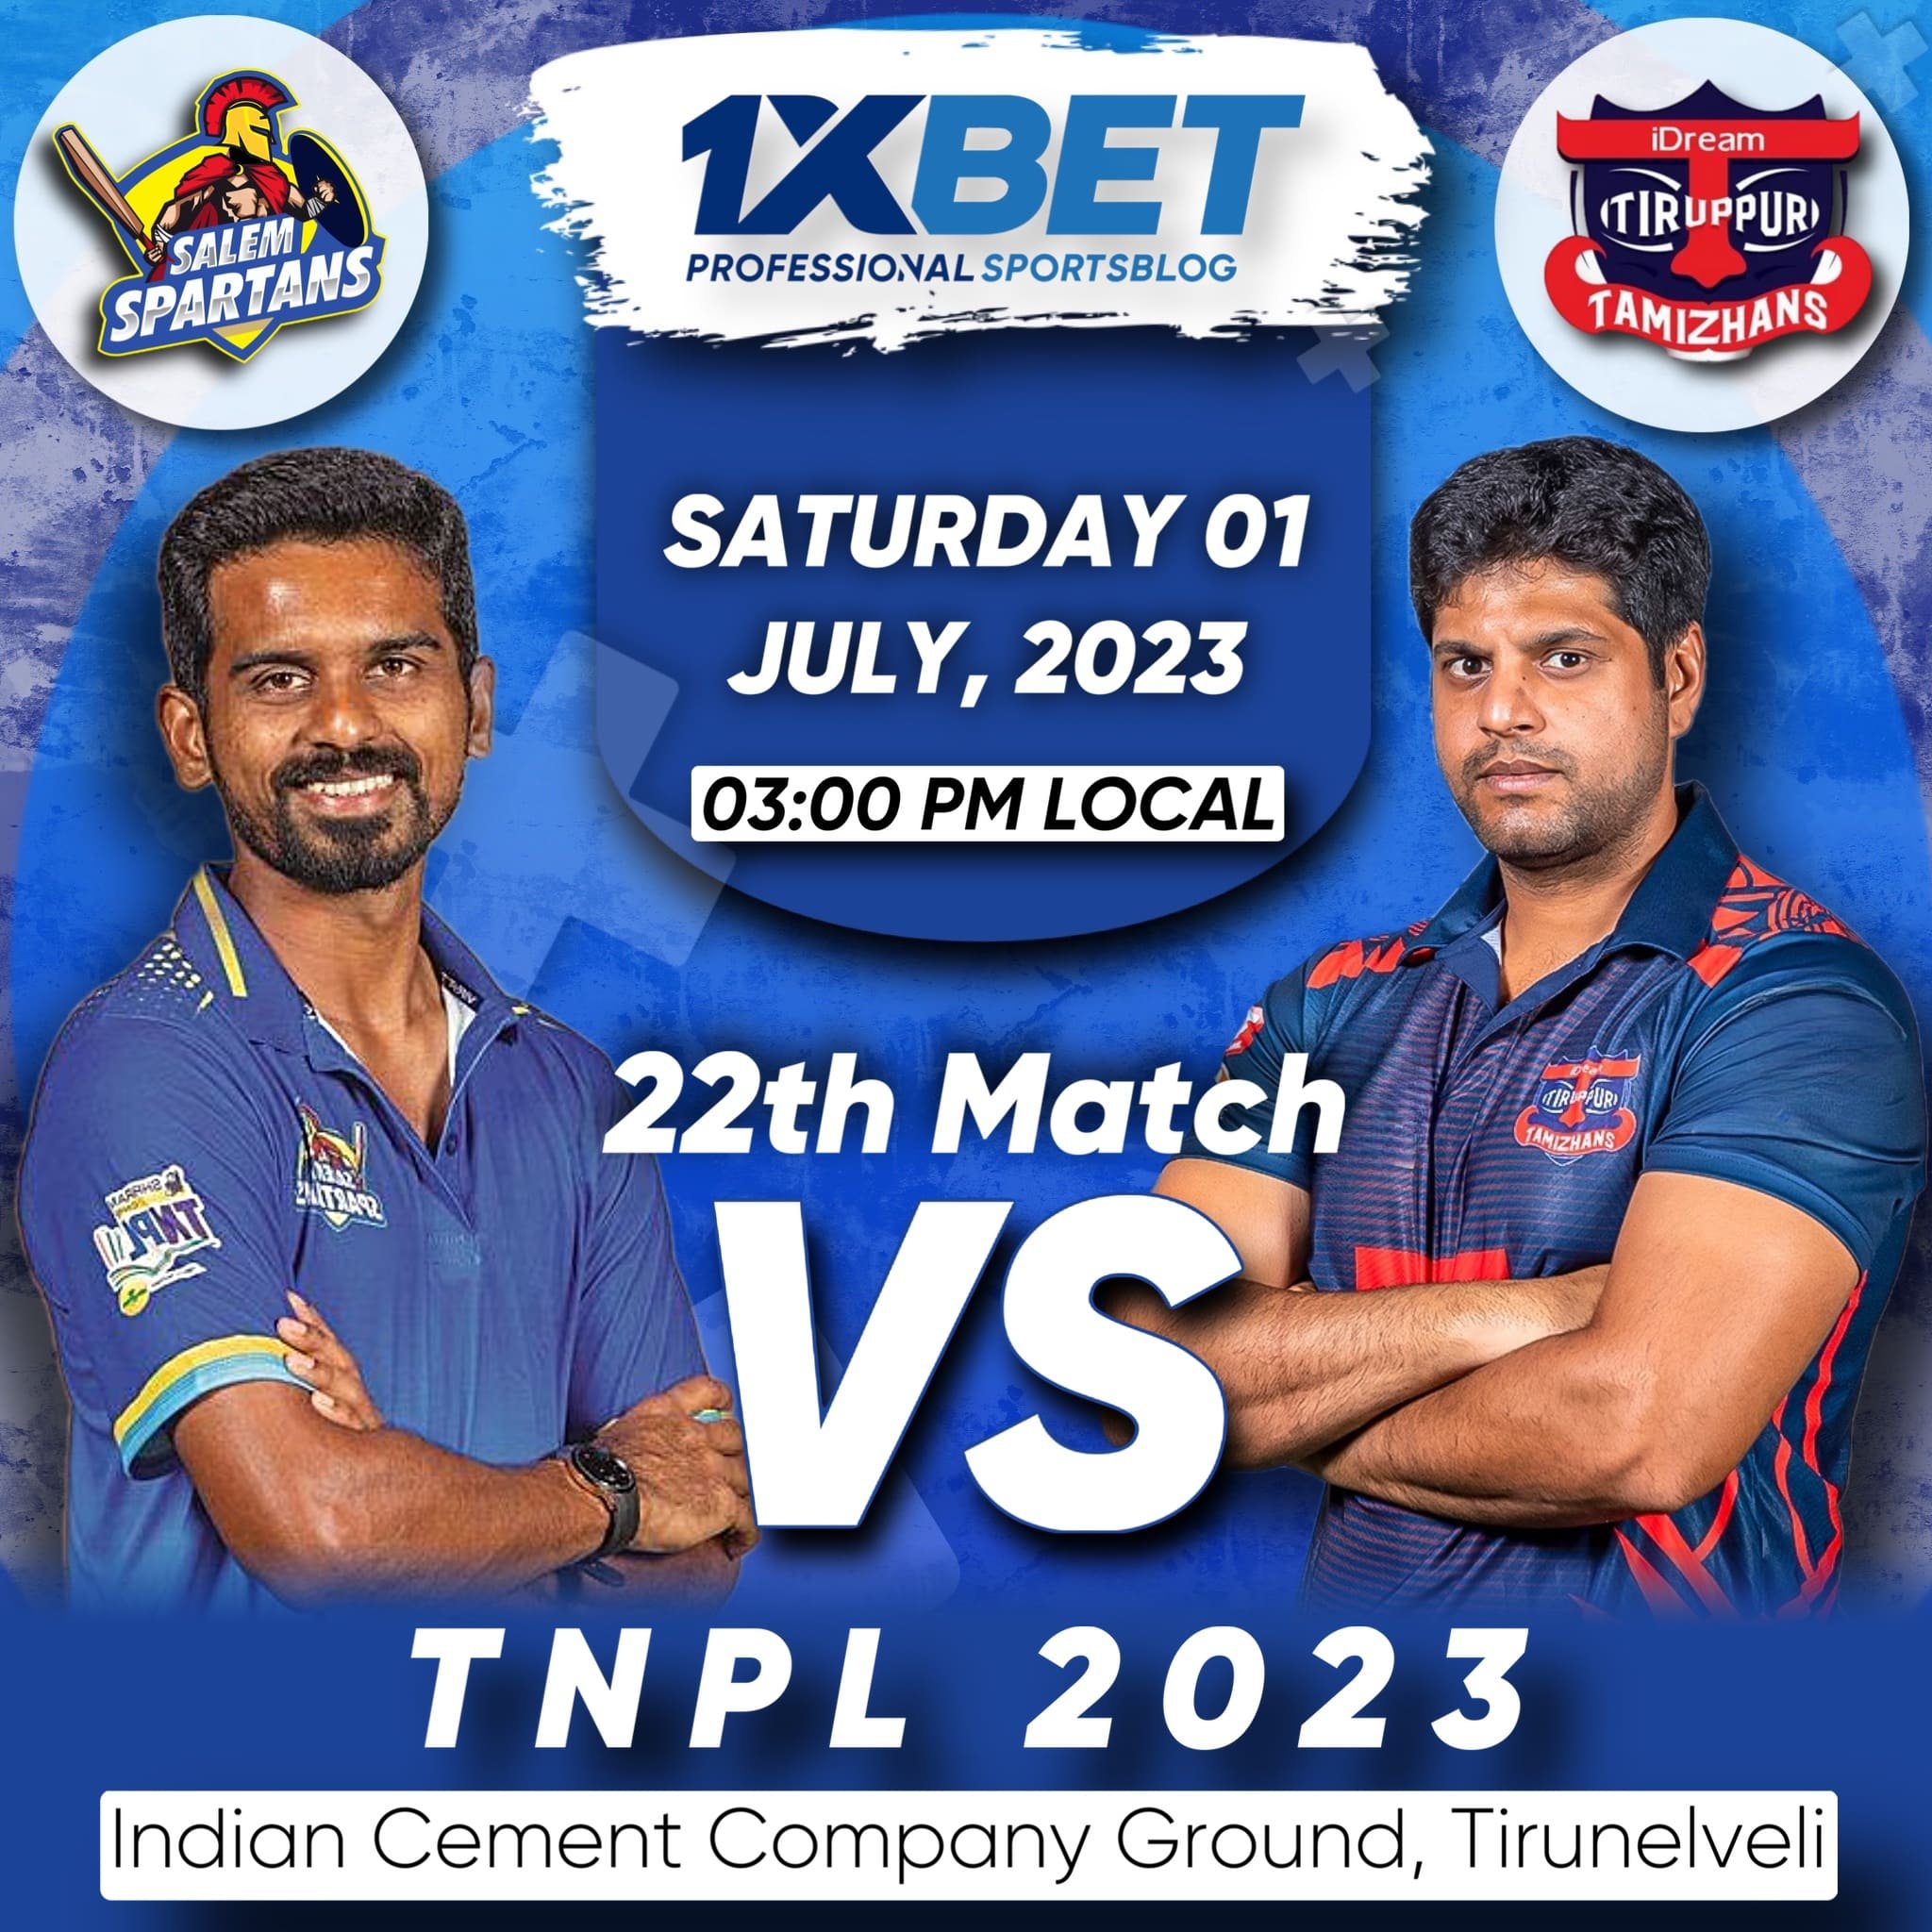 IDream Tiruppur Tamizhans vs Salem Spartans, TNPL 2023, 22nd Match Analysis